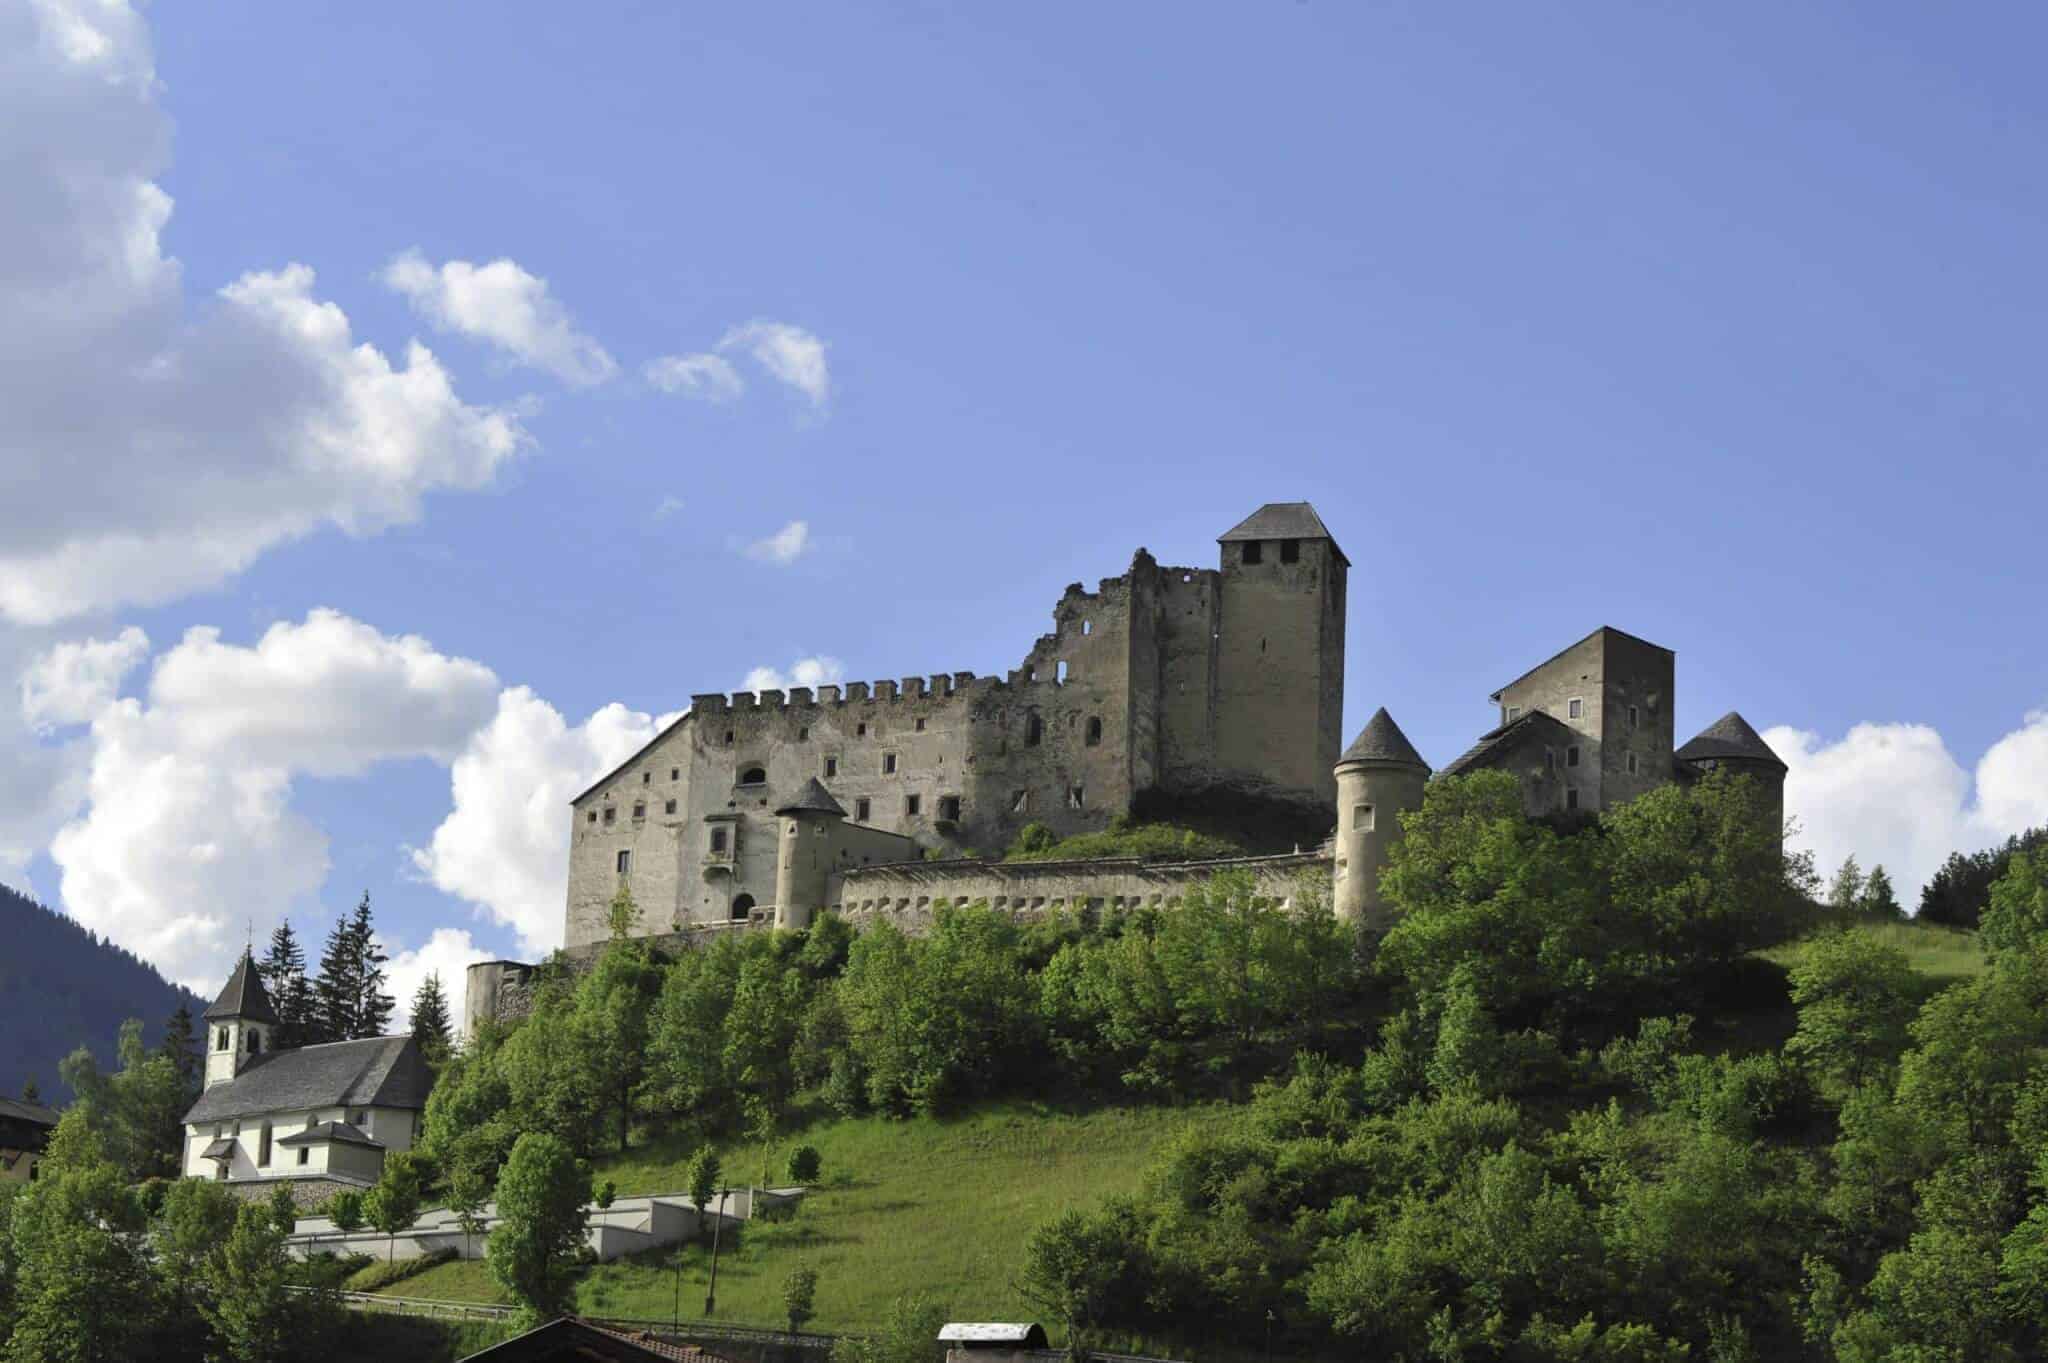 The heimfels castle